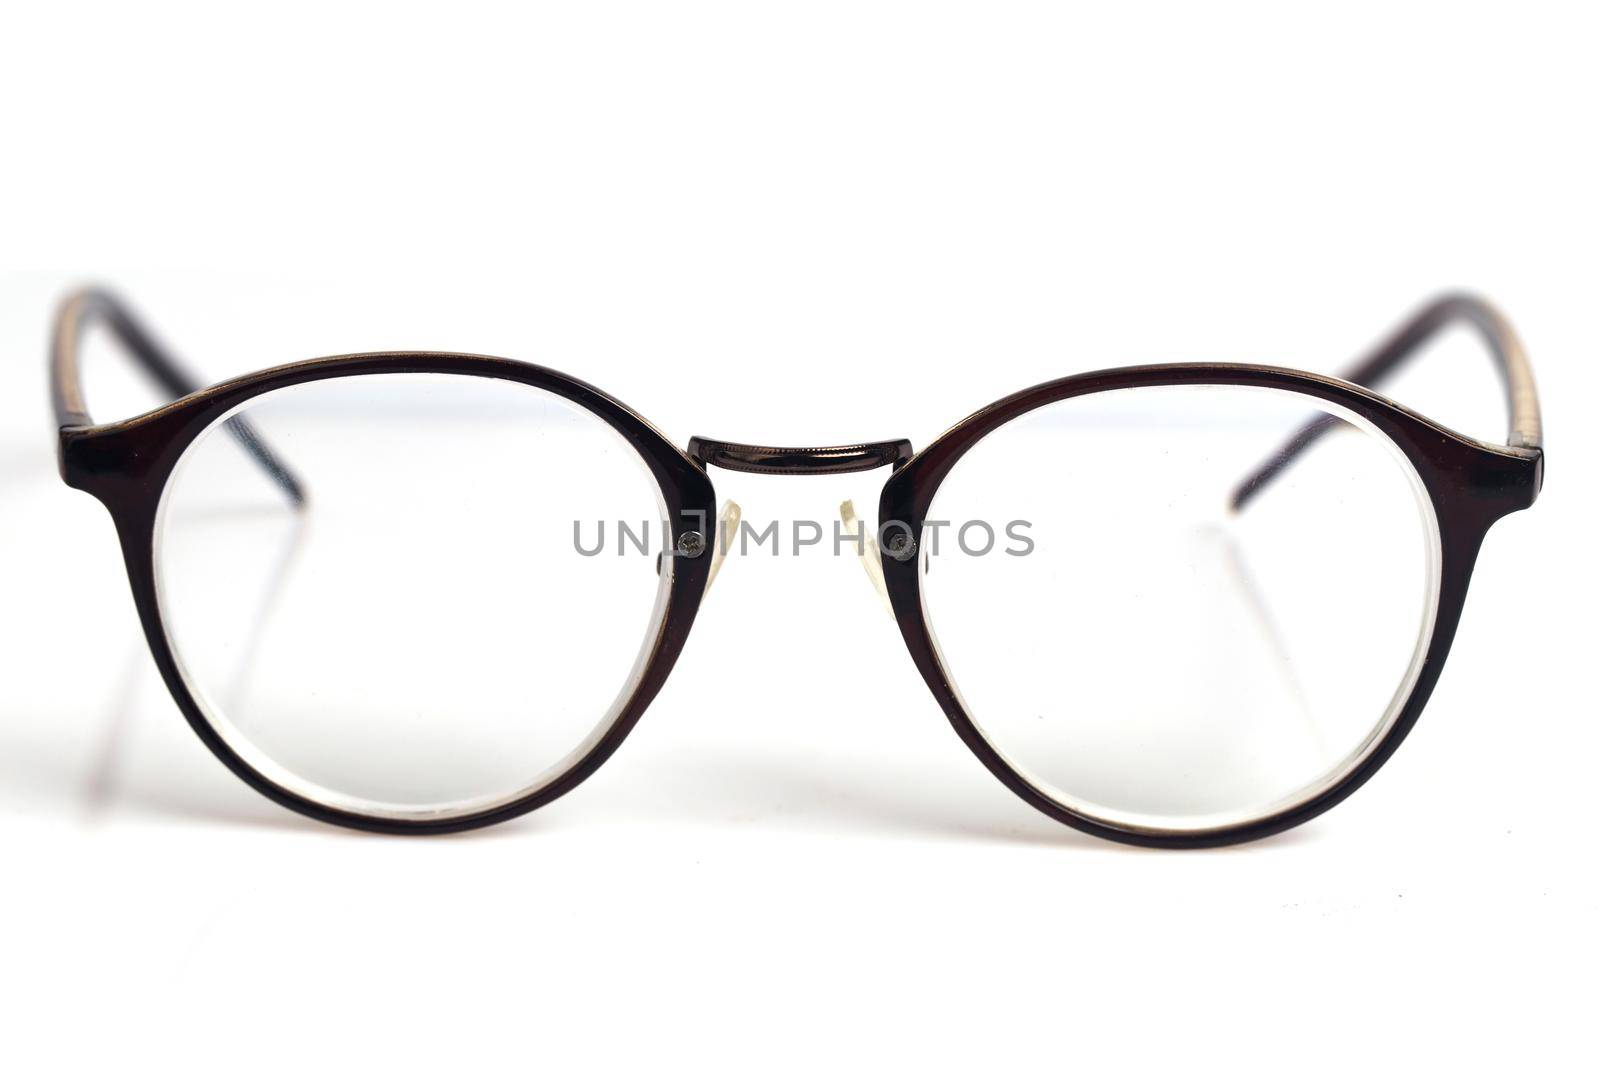 Closeup of black horned rim glasses Qinessential nerd gear